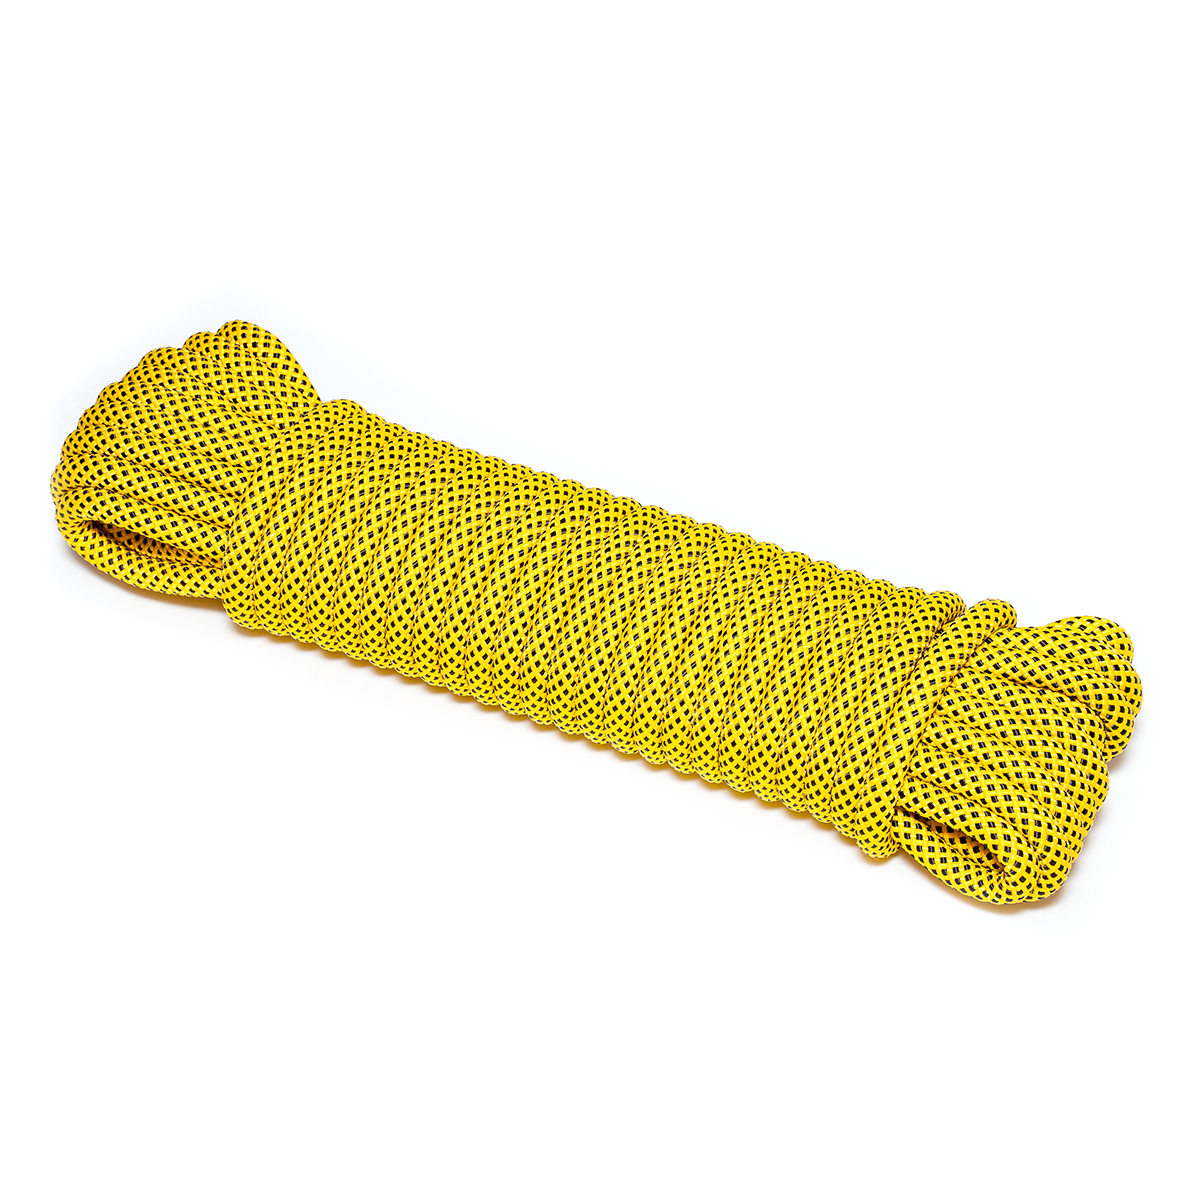 Шнур плетеный ЭКСТРИМ 12.0 мм, черно-желтый, 1400 кг, 20 м шнур для вязания